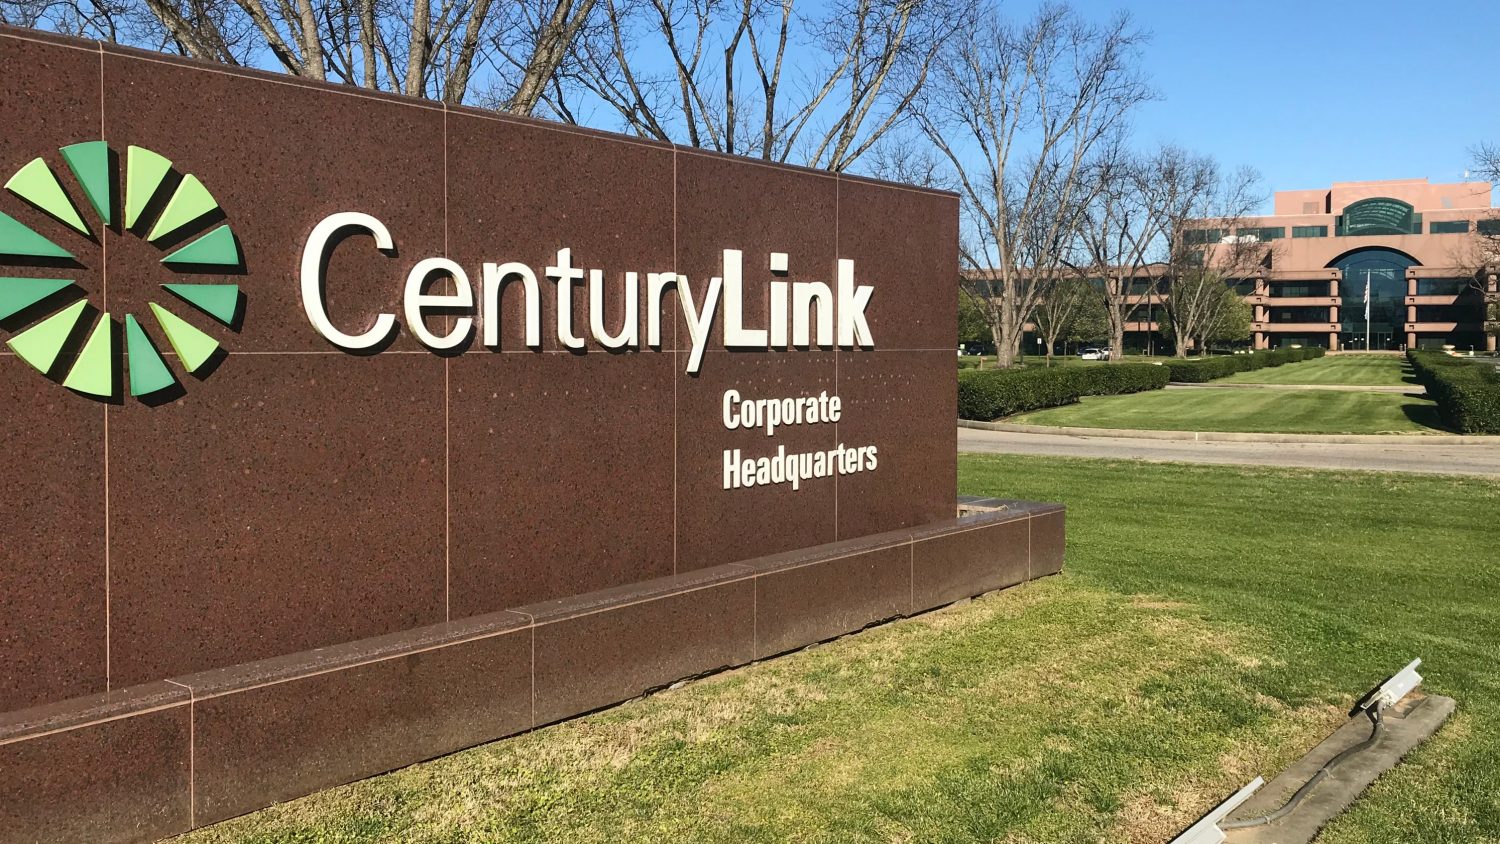 CenturyLink in holding pattern on broadband internet expansion